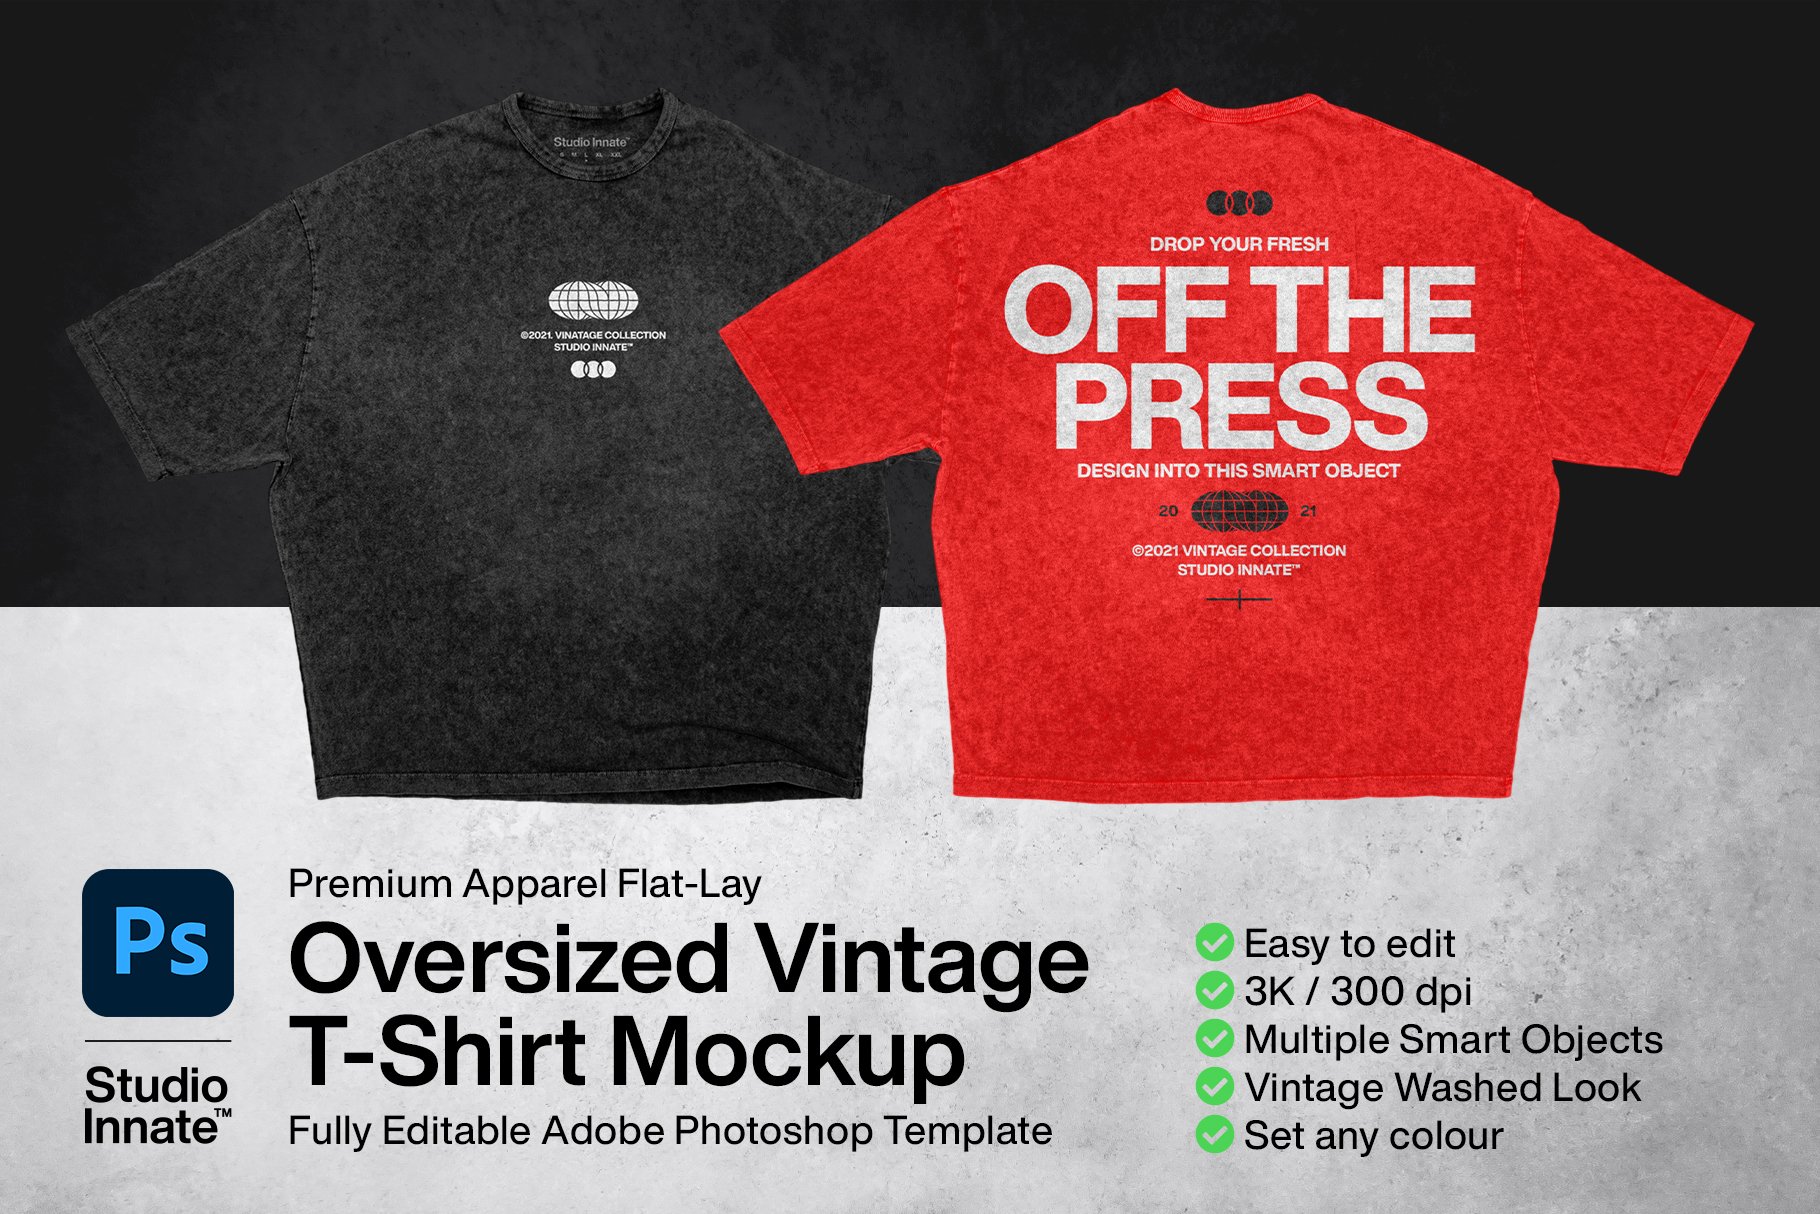 Oversized Vintage T-shirt Mockup cover image.